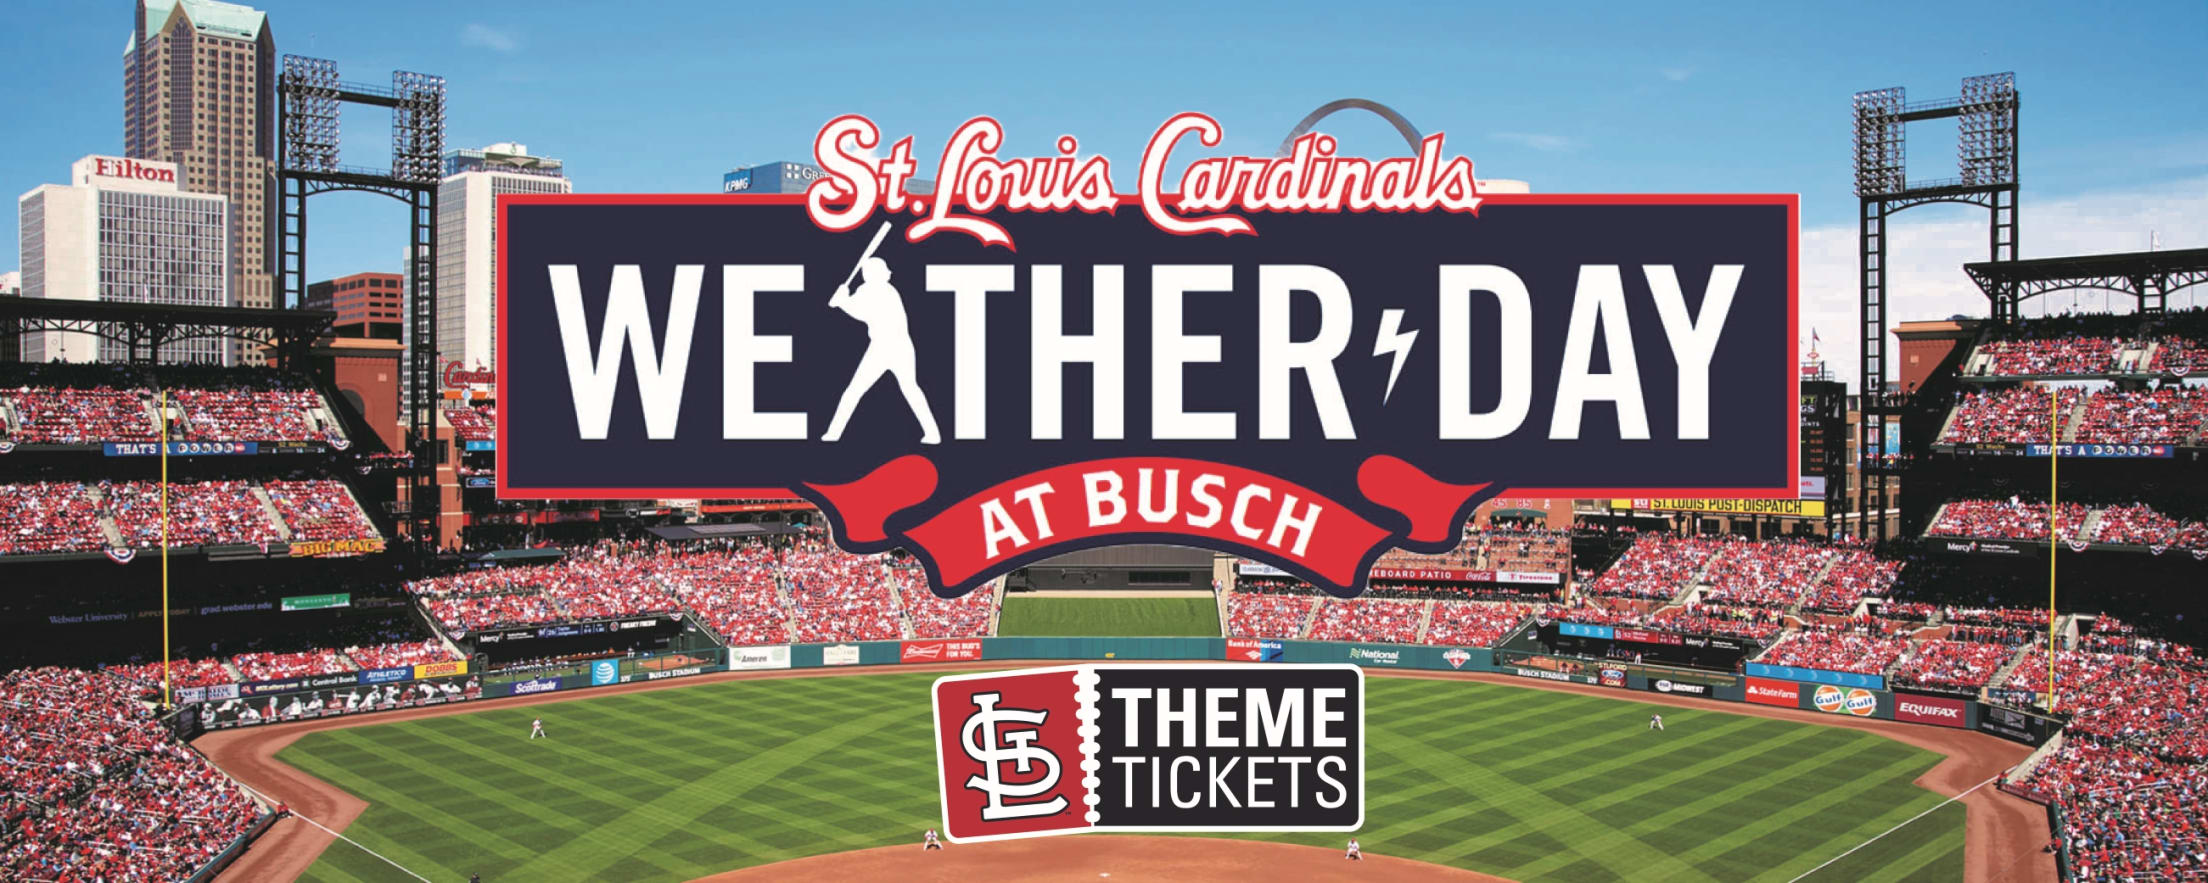 St. Louis Cardinals Home Opener Weather Statistics